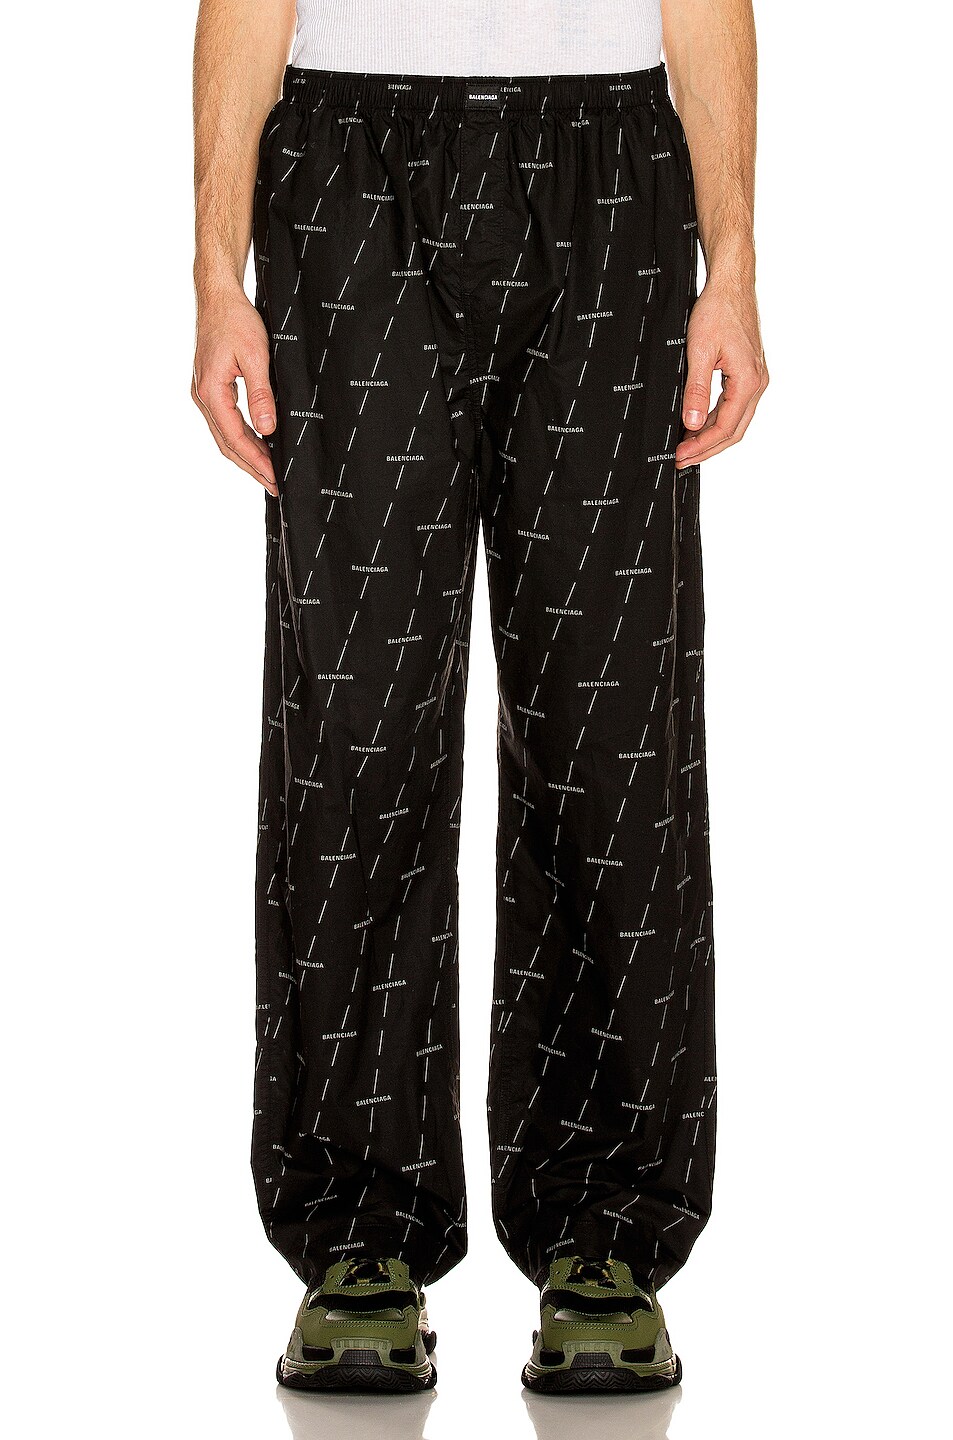 Balenciaga Pyjama Pants in Black & Grey | FWRD